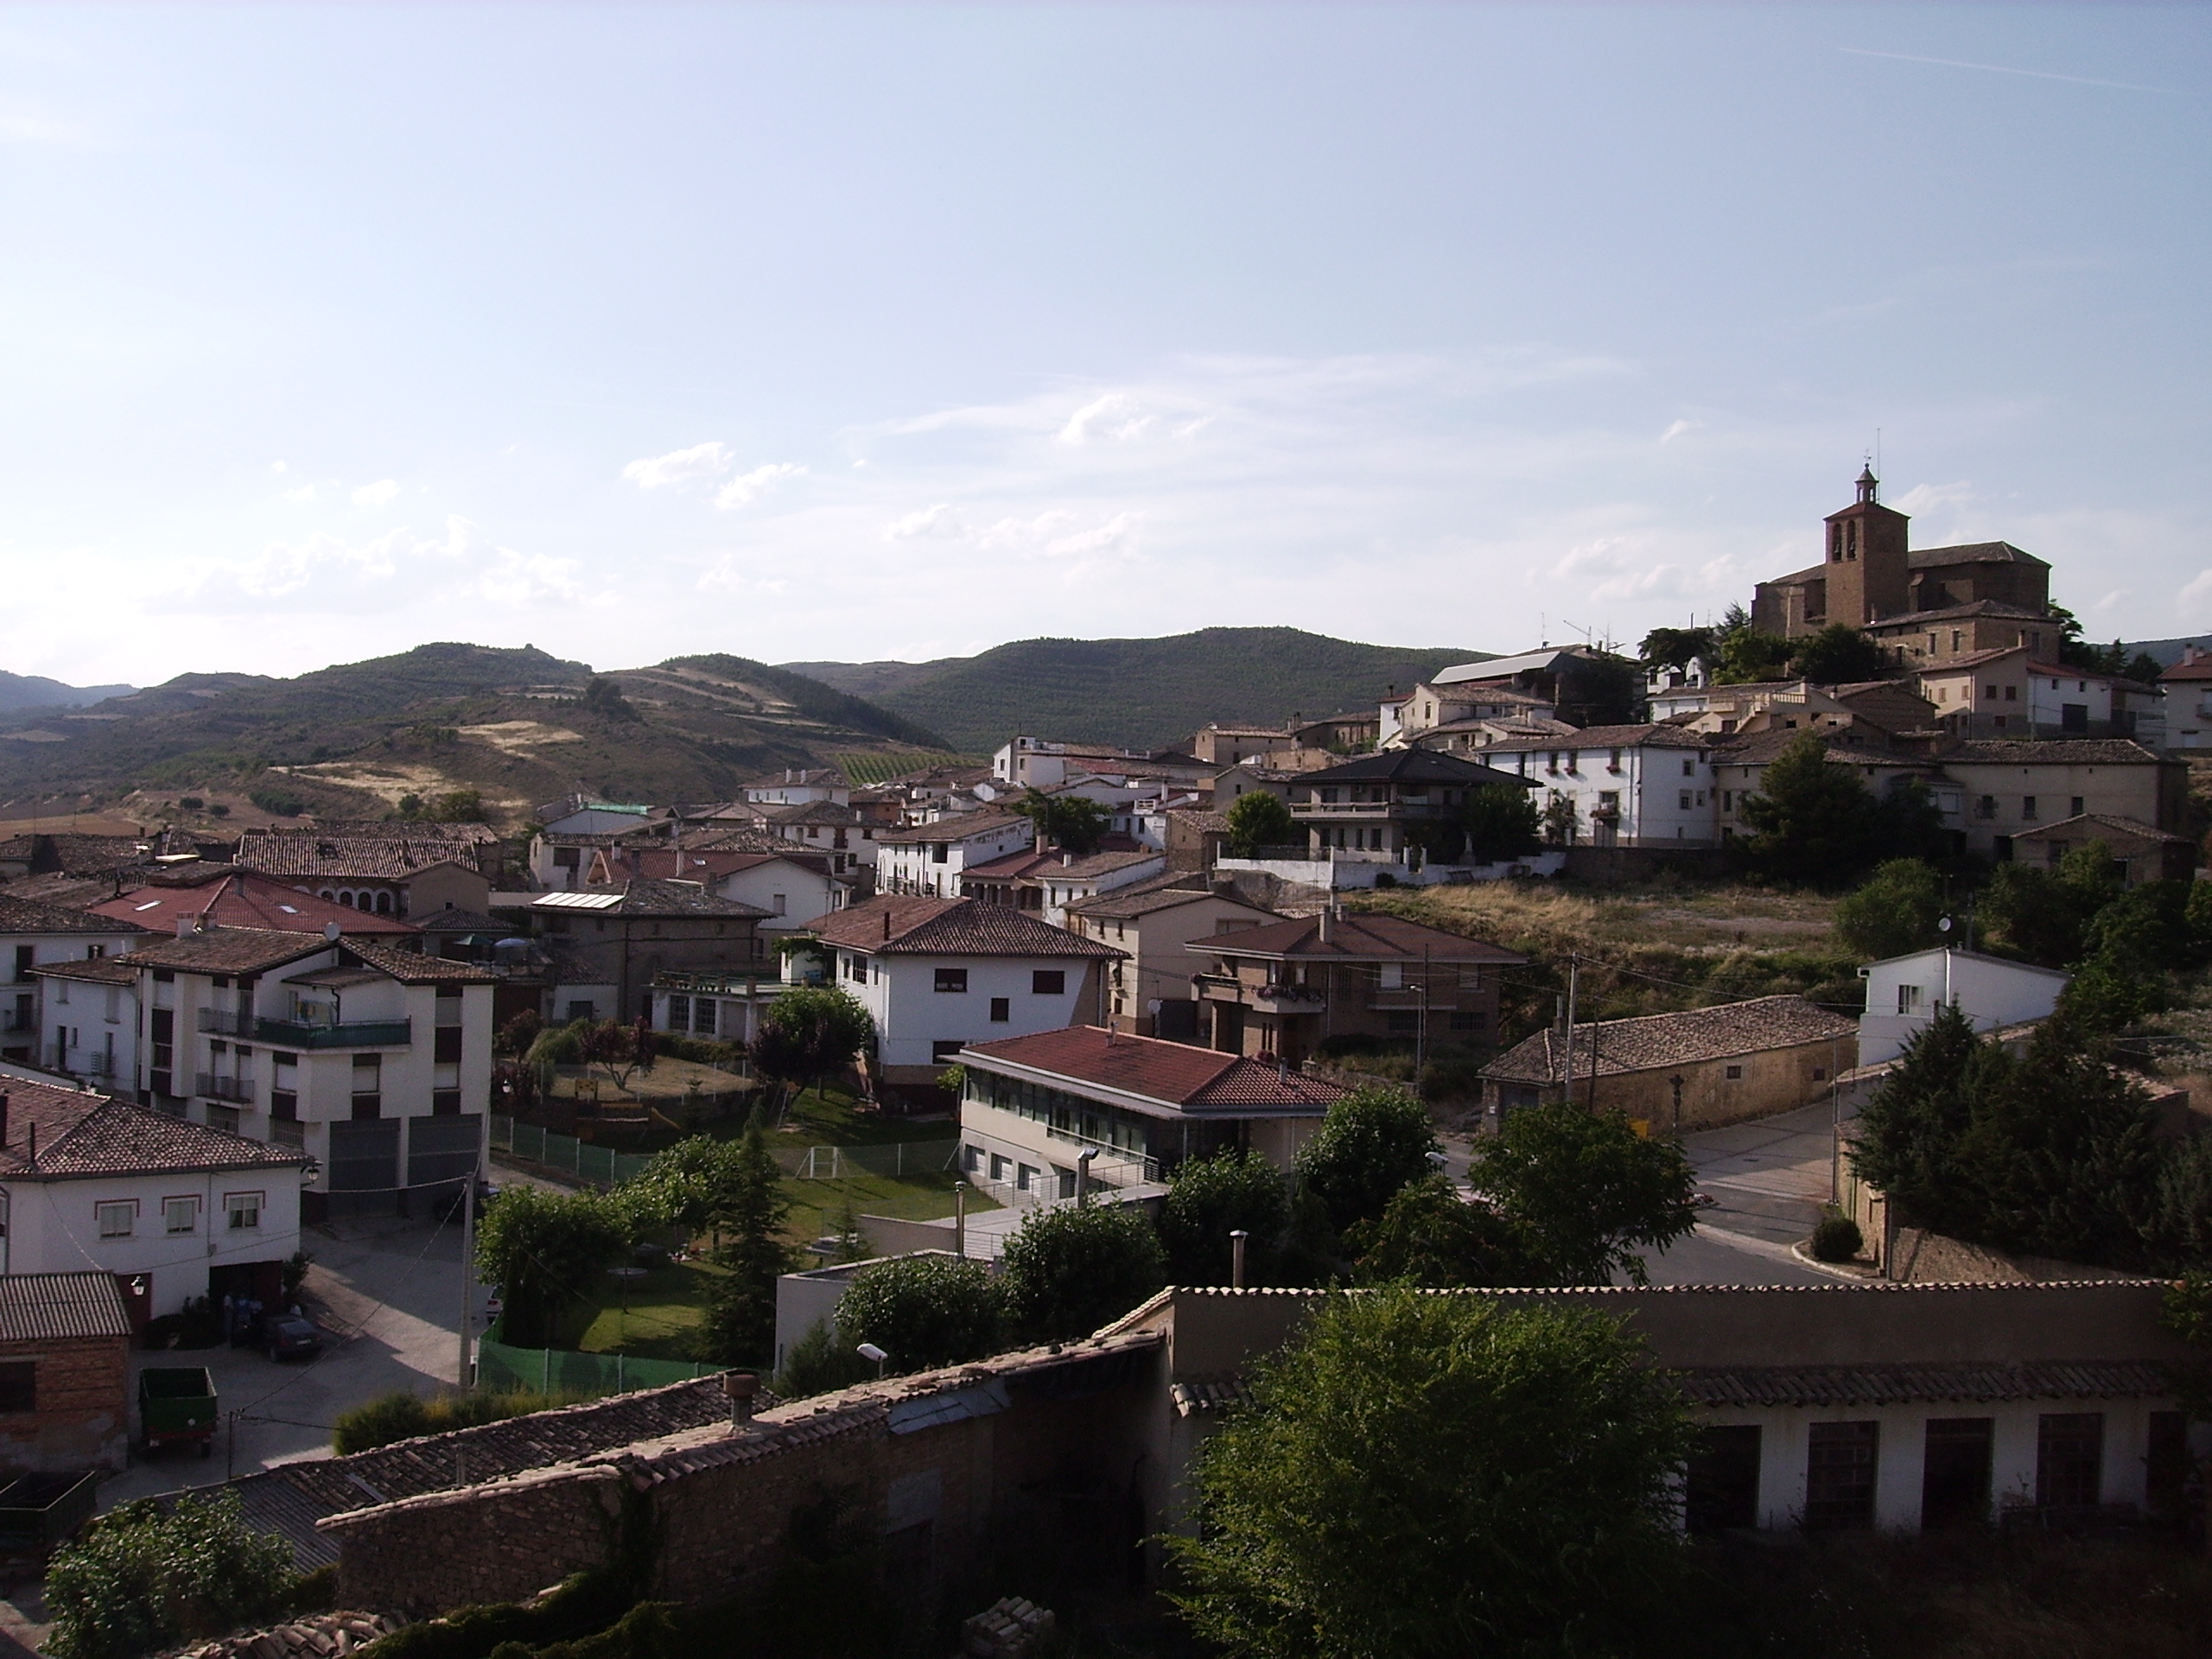 File:Sada, Navarra, img 0041.jpg - Wikimedia Commons